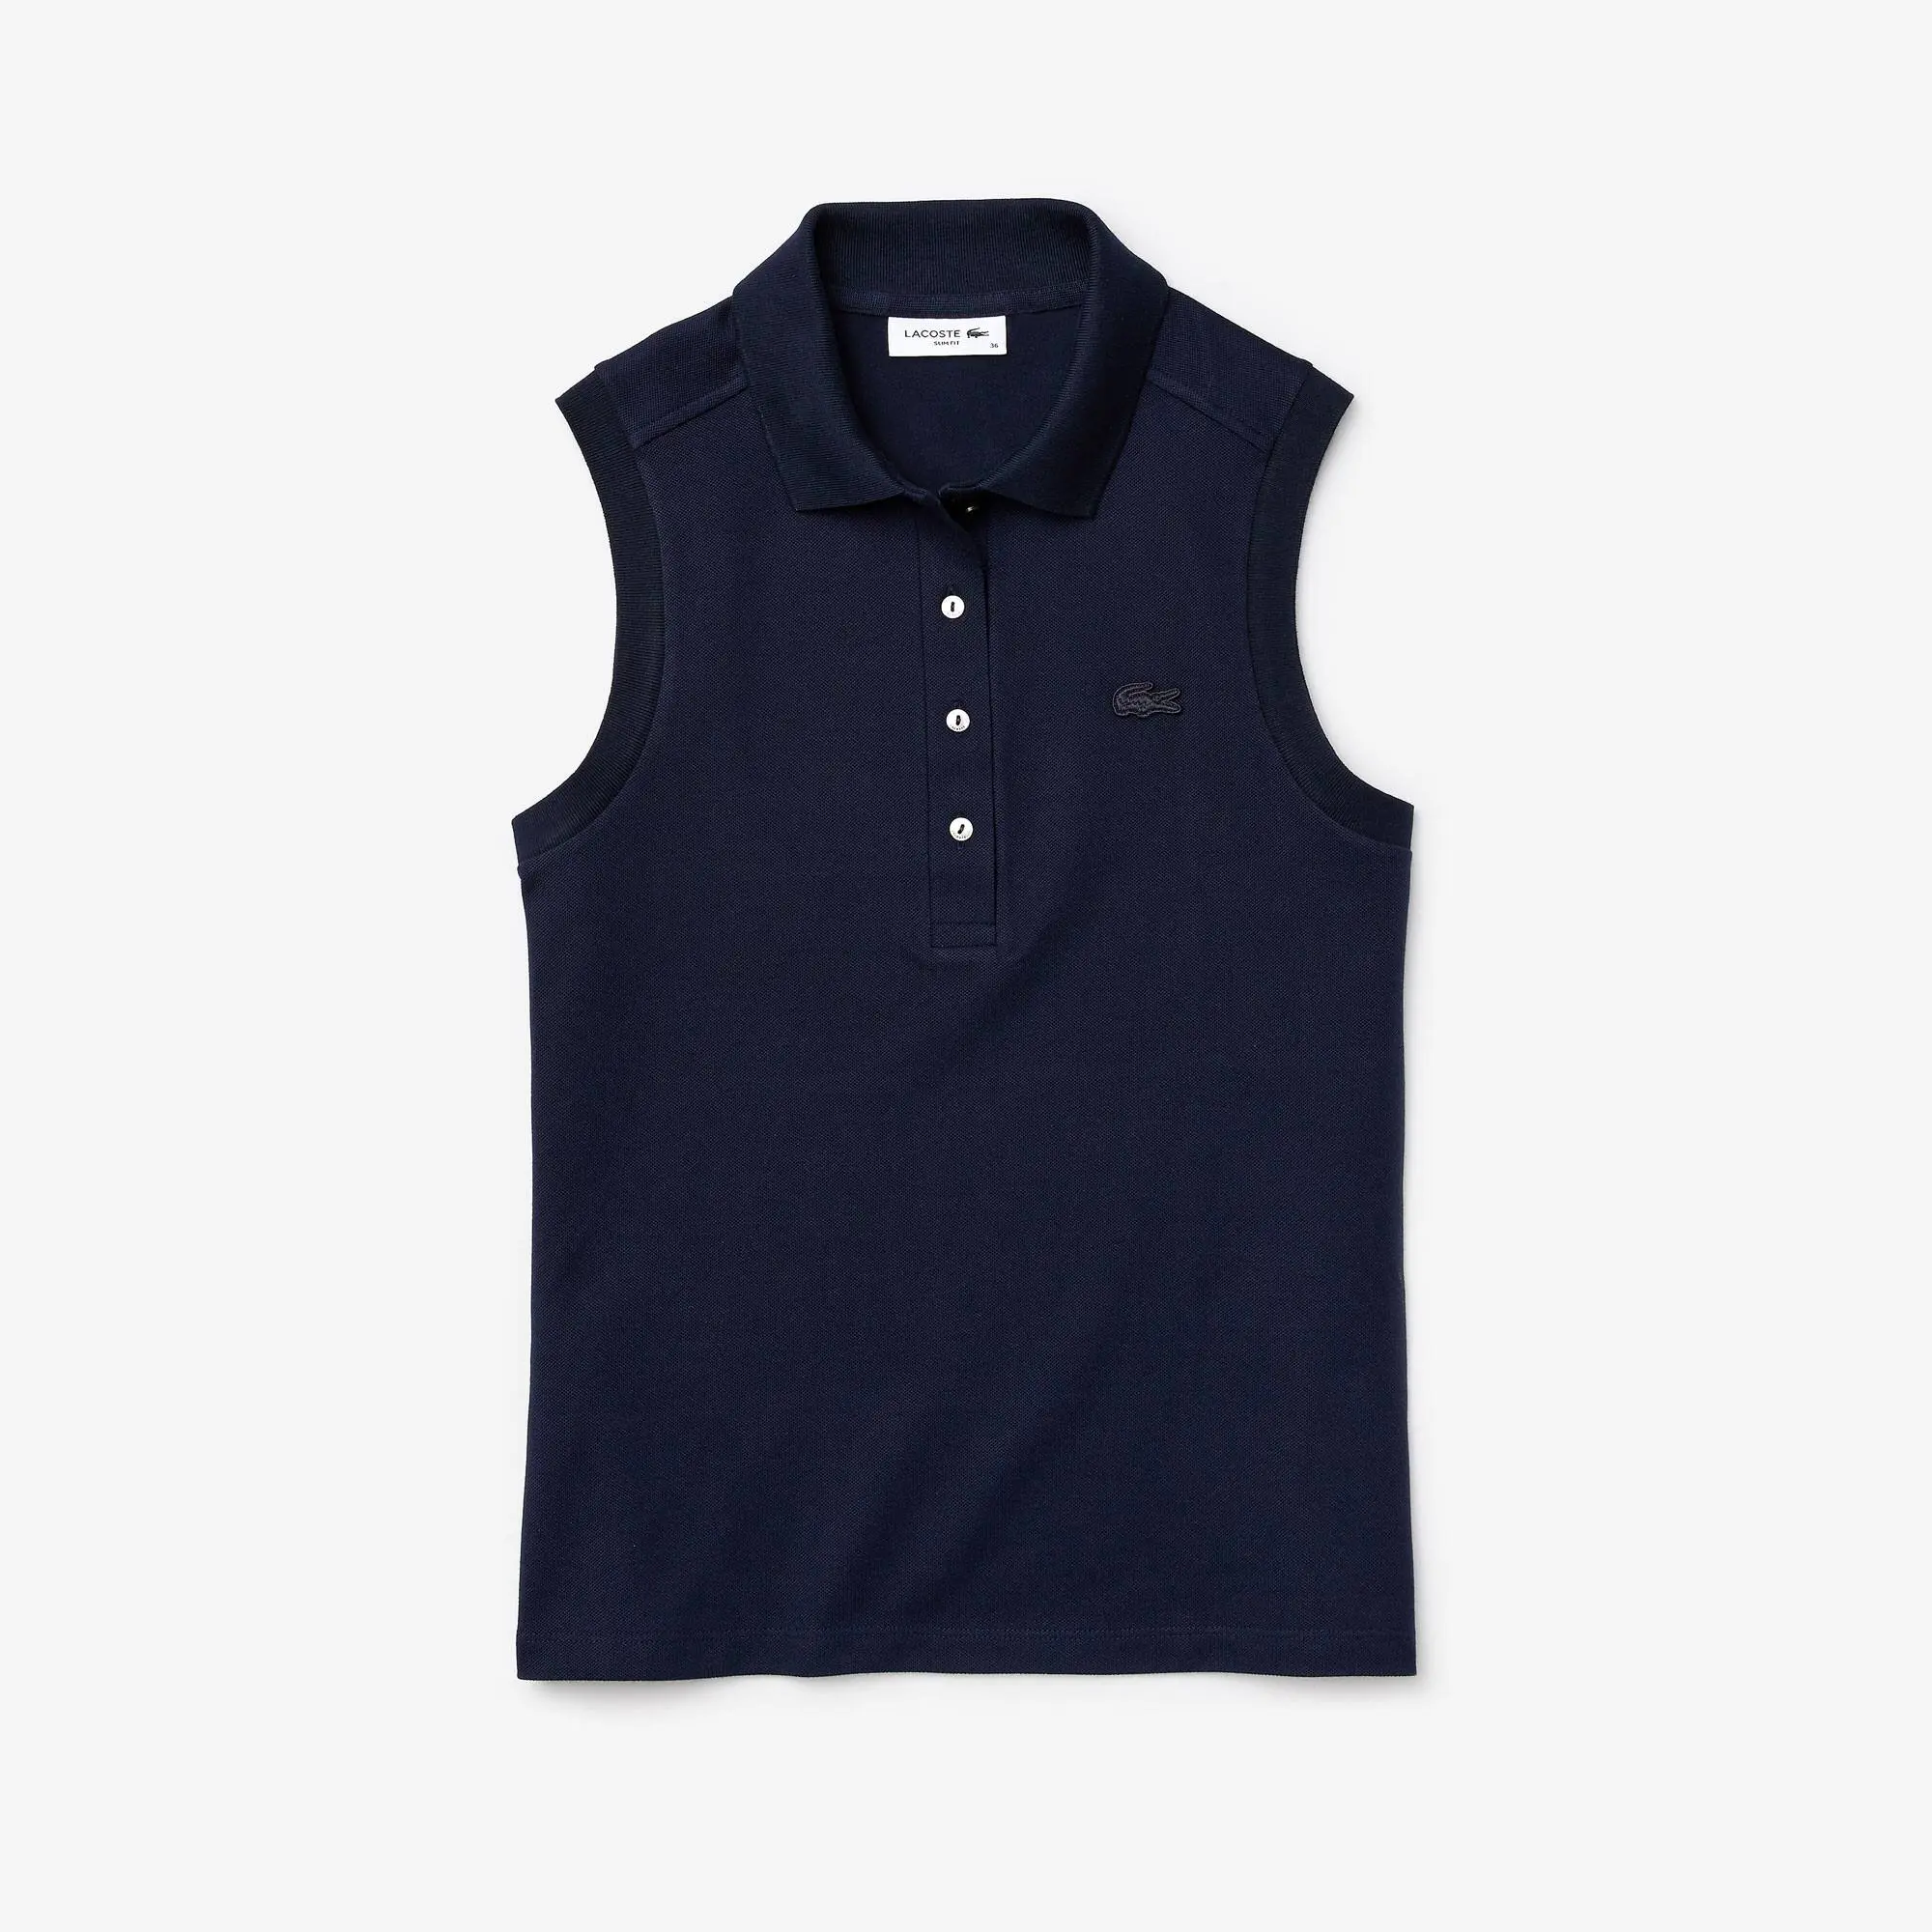 Lacoste Women's Lacoste Slim fit Sleeveless Cotton Piqué Polo Shirt. 2